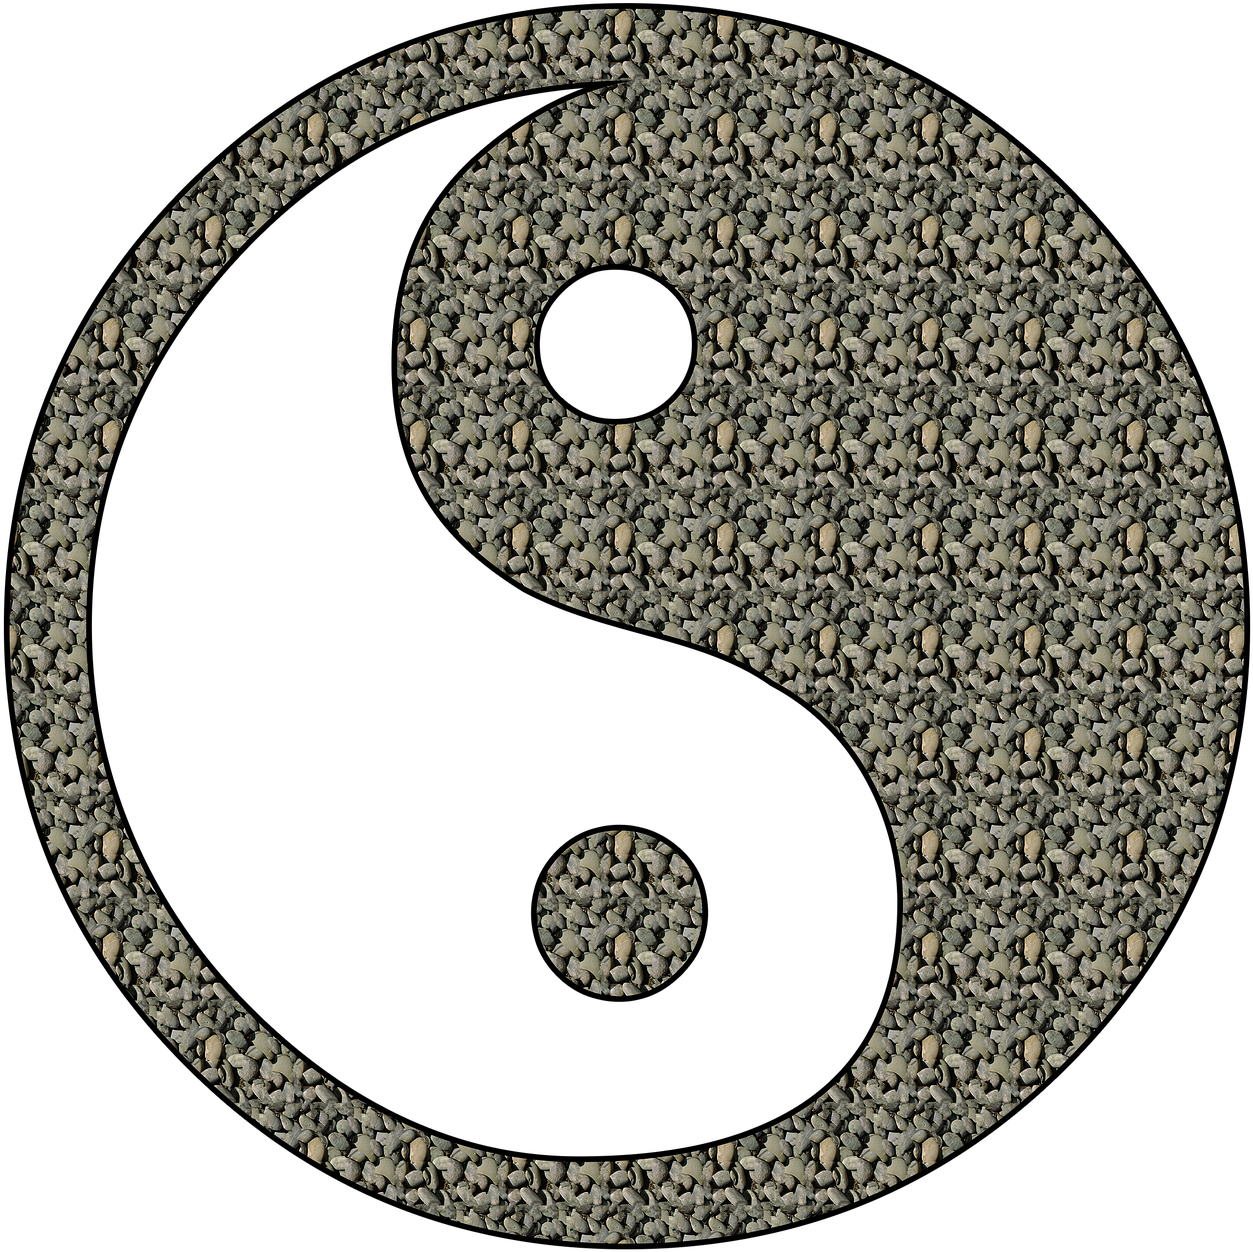 A Yin Yang Symbol Made Of Rocks